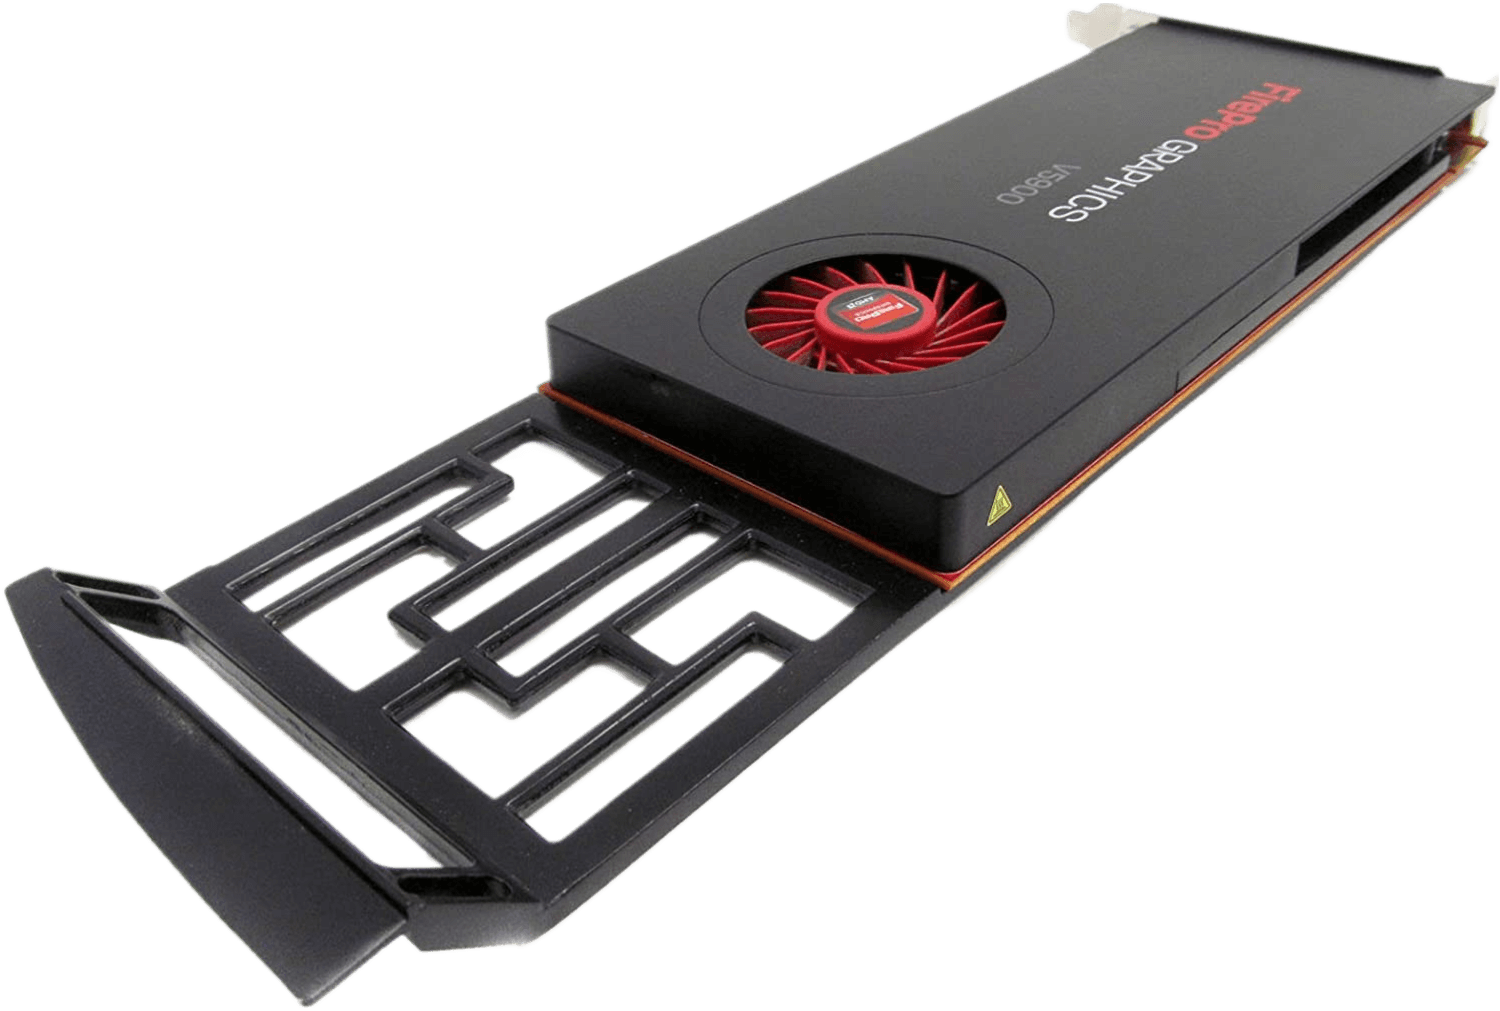 Dell AMD FirePro V5900 2GB 256-bit GDDR5 PCI Express 2.1 x16 Workstation Video Card 5DRVJ